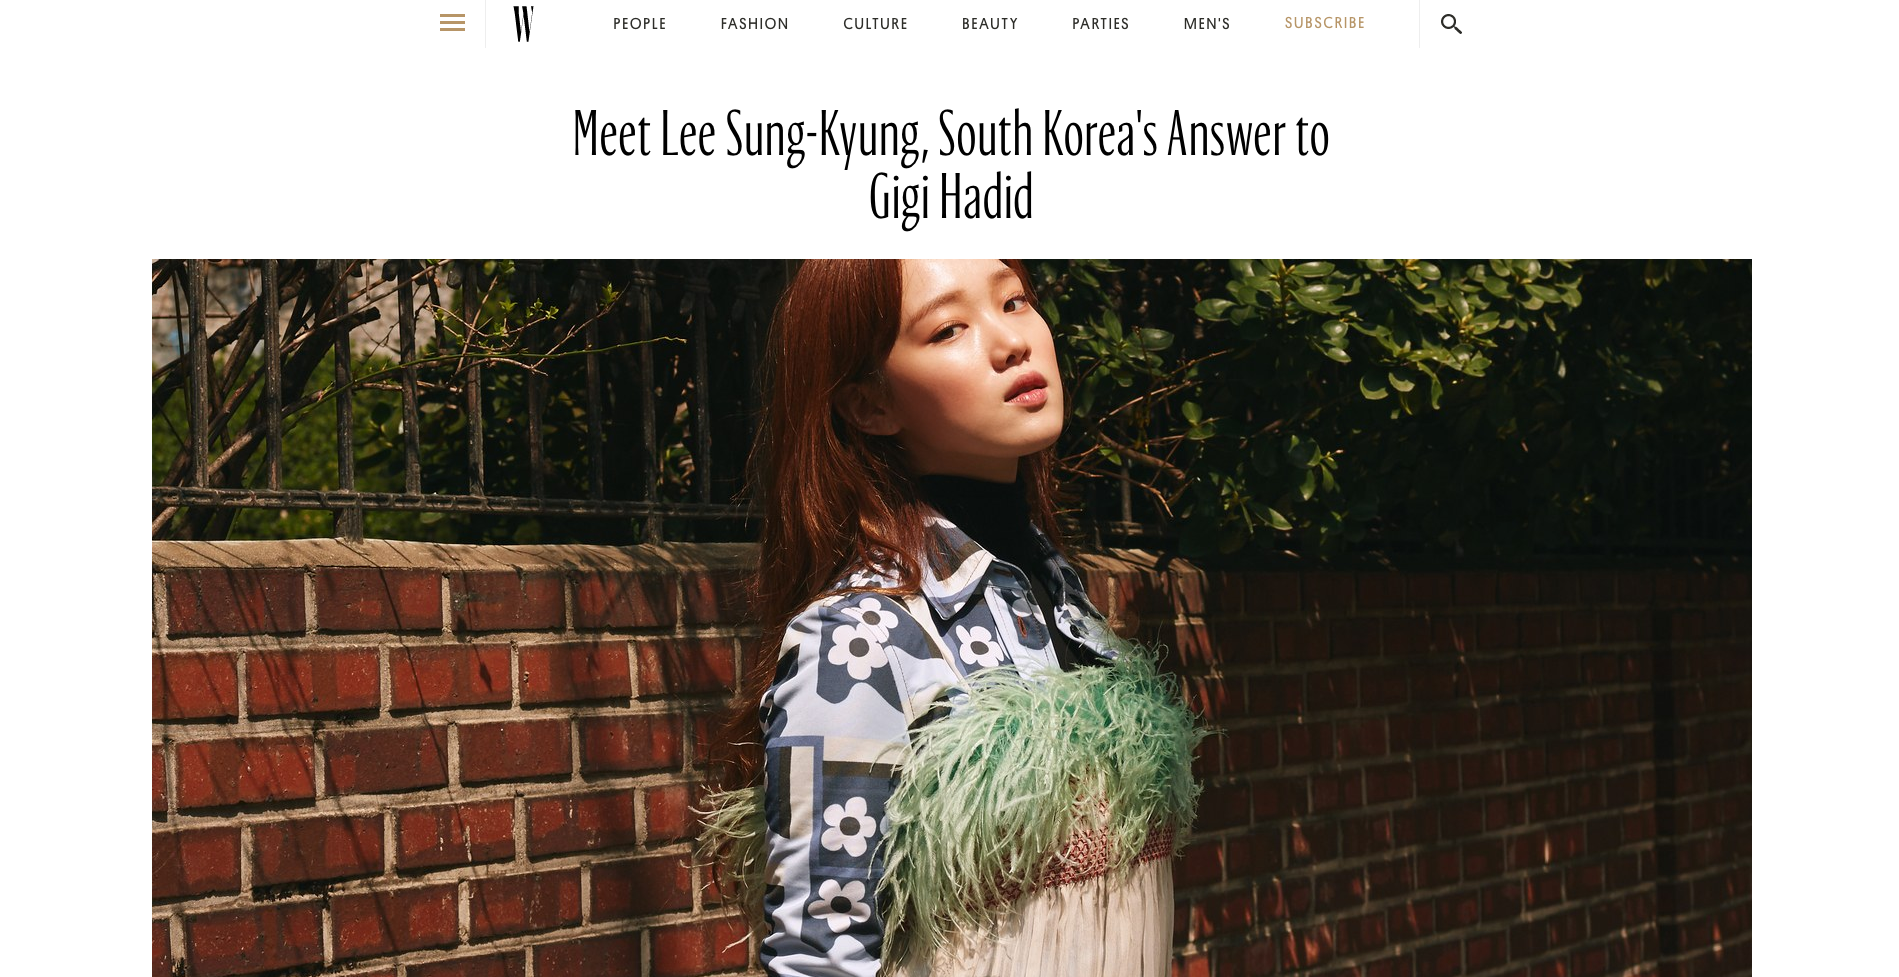 Lee Sung-kyung on W Magazine